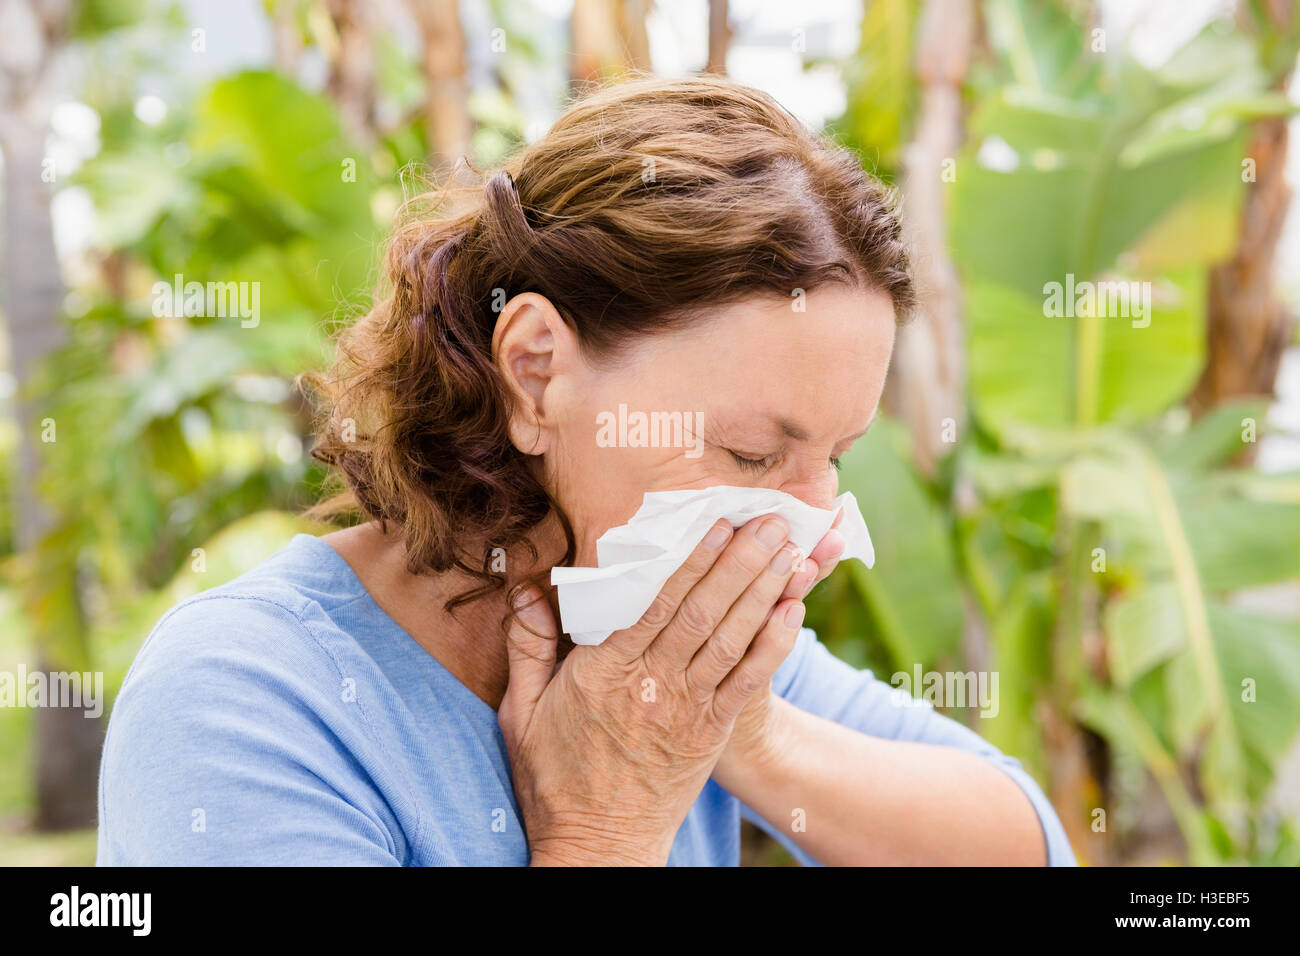 Mature woman sneezing Stock Photo